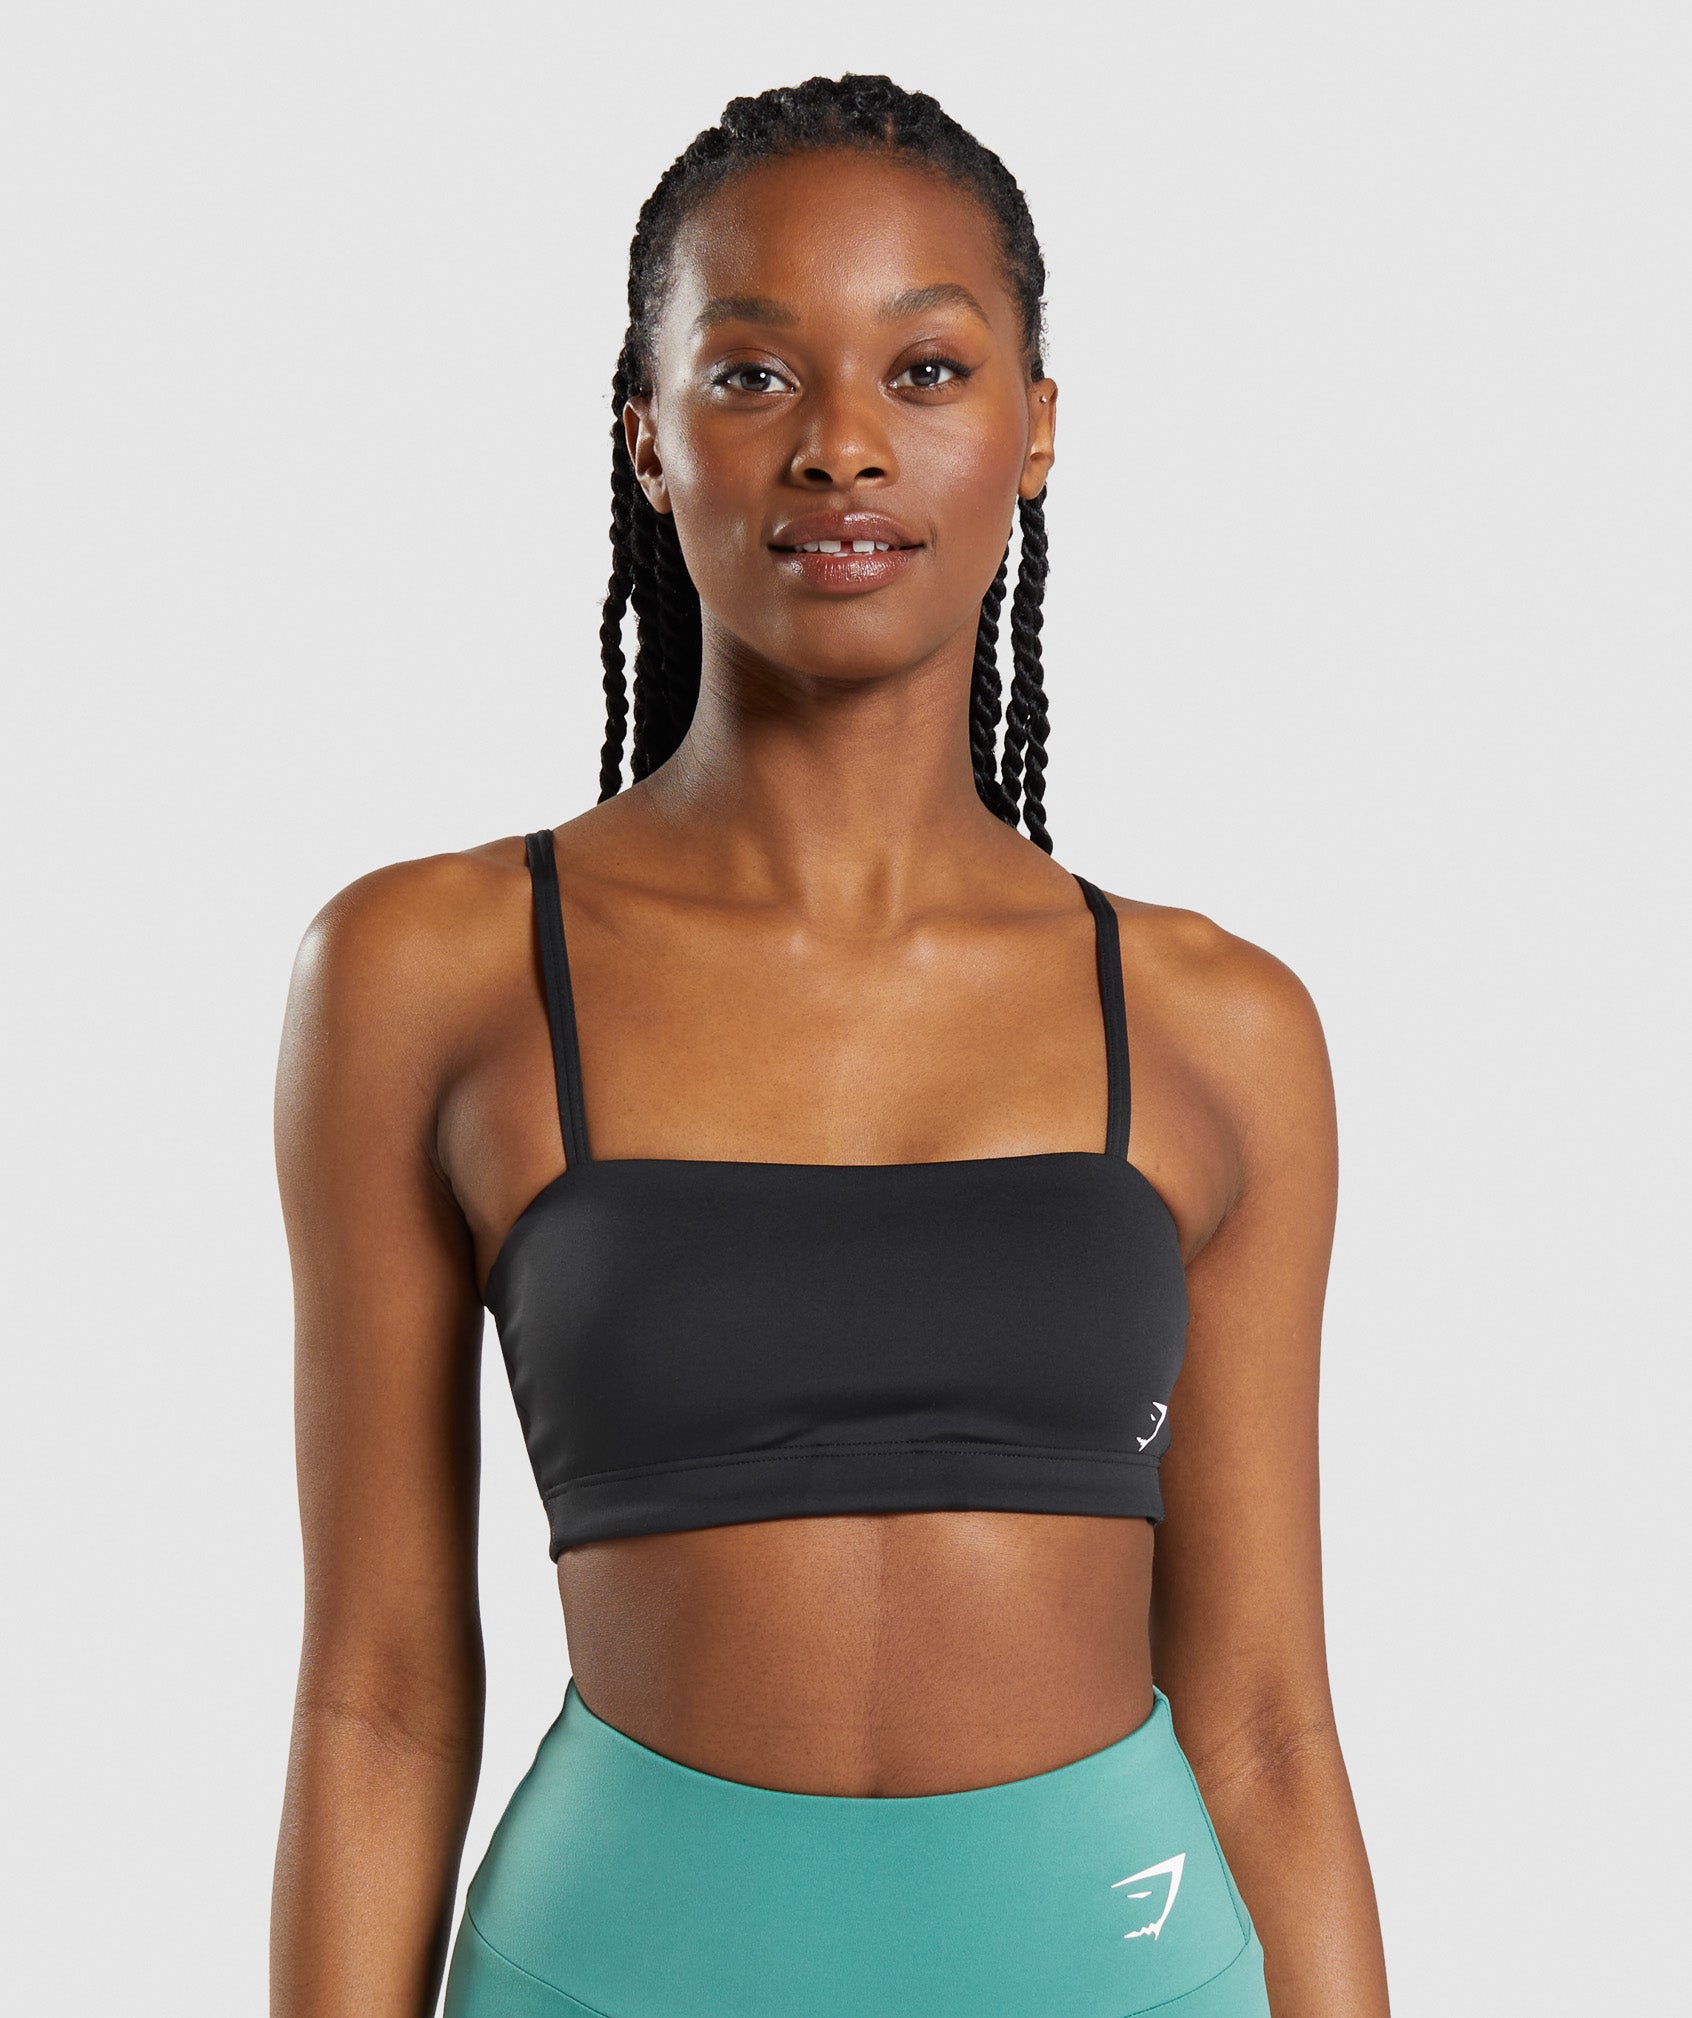 Hot Bodysuit Padded Size Plus Top Bra for Women Stretchy Bra Yoga Bras  Sports Bandeau Strapless Wireless Bra, Black, Small : : Home